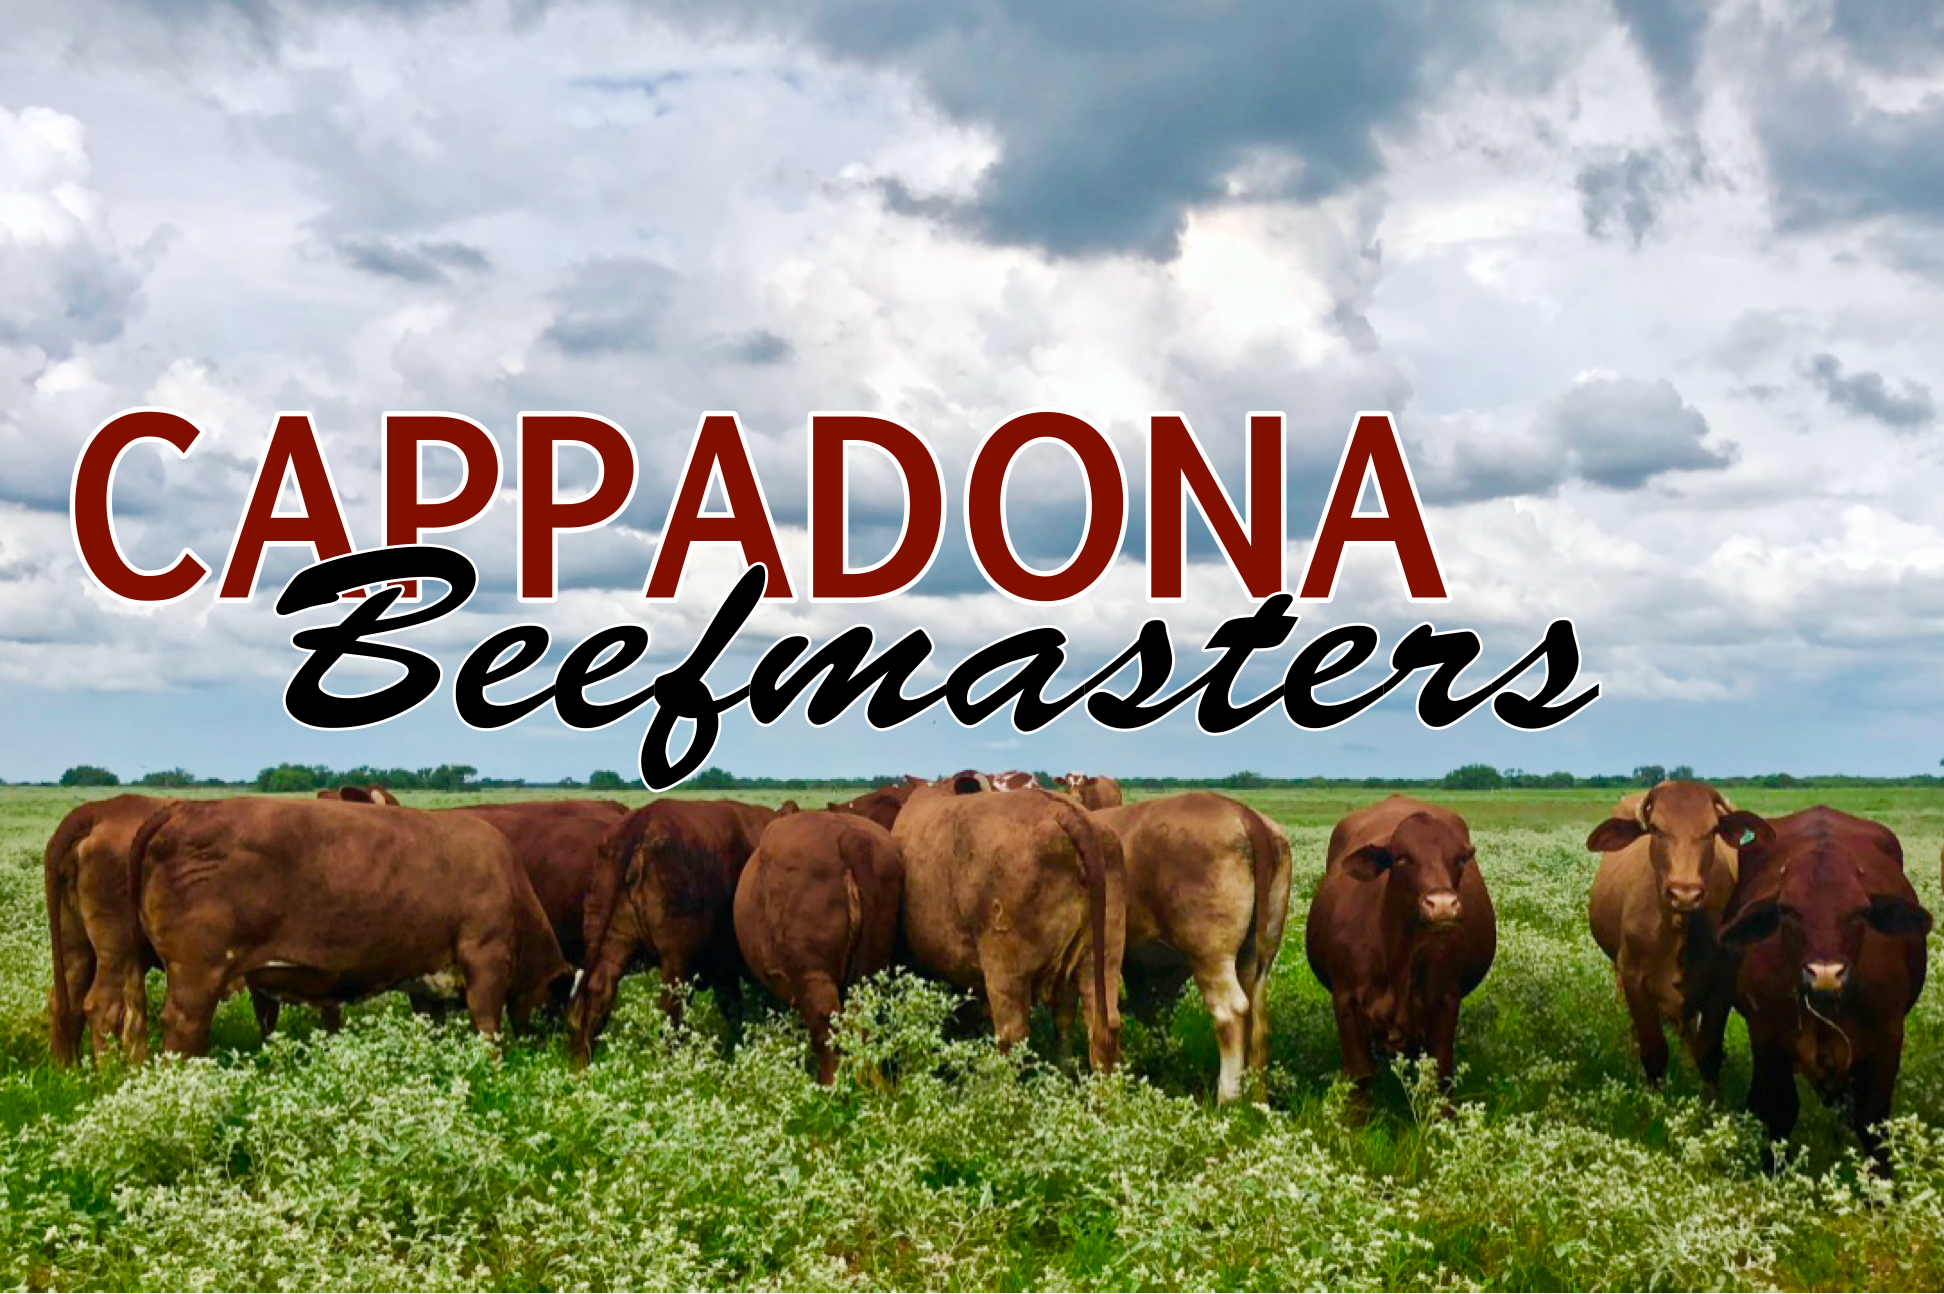 The History of Cappadona Beefmasters